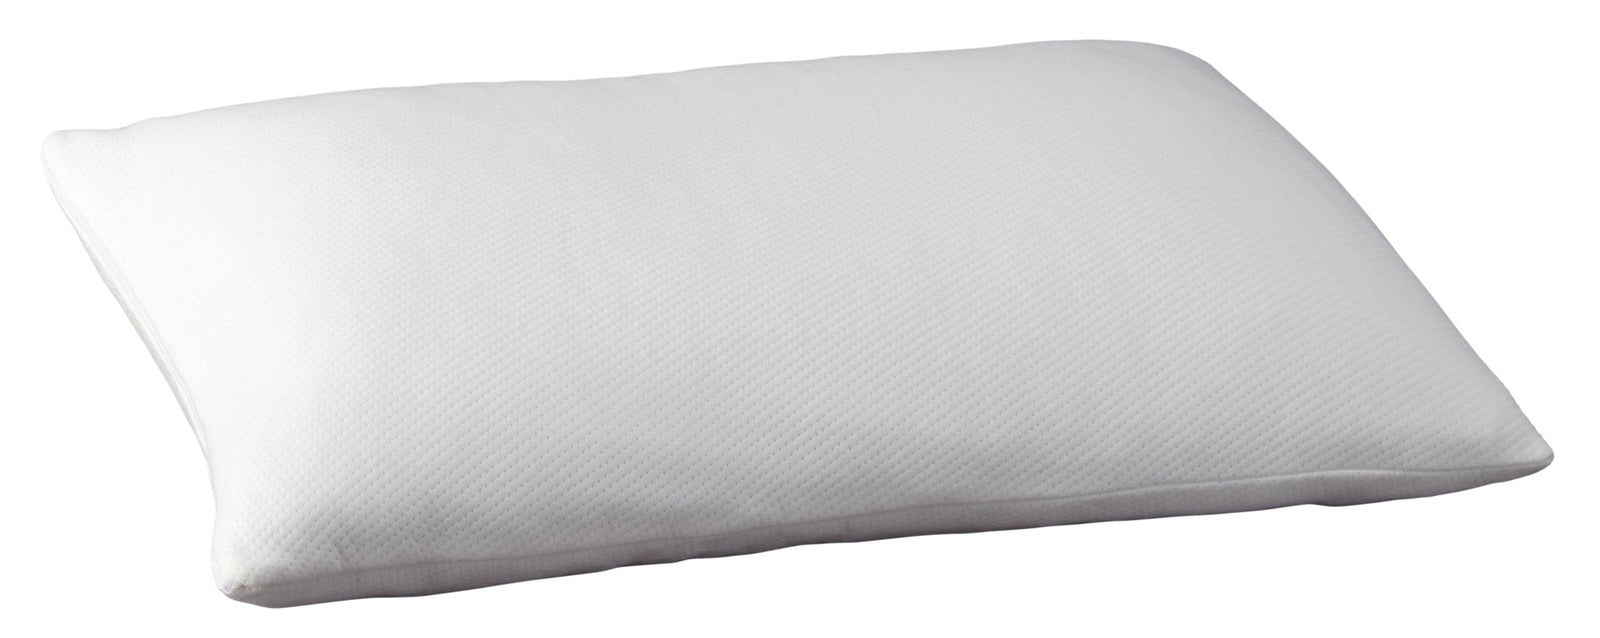 Promotional White Memory Foam Pillow - Ella Furniture